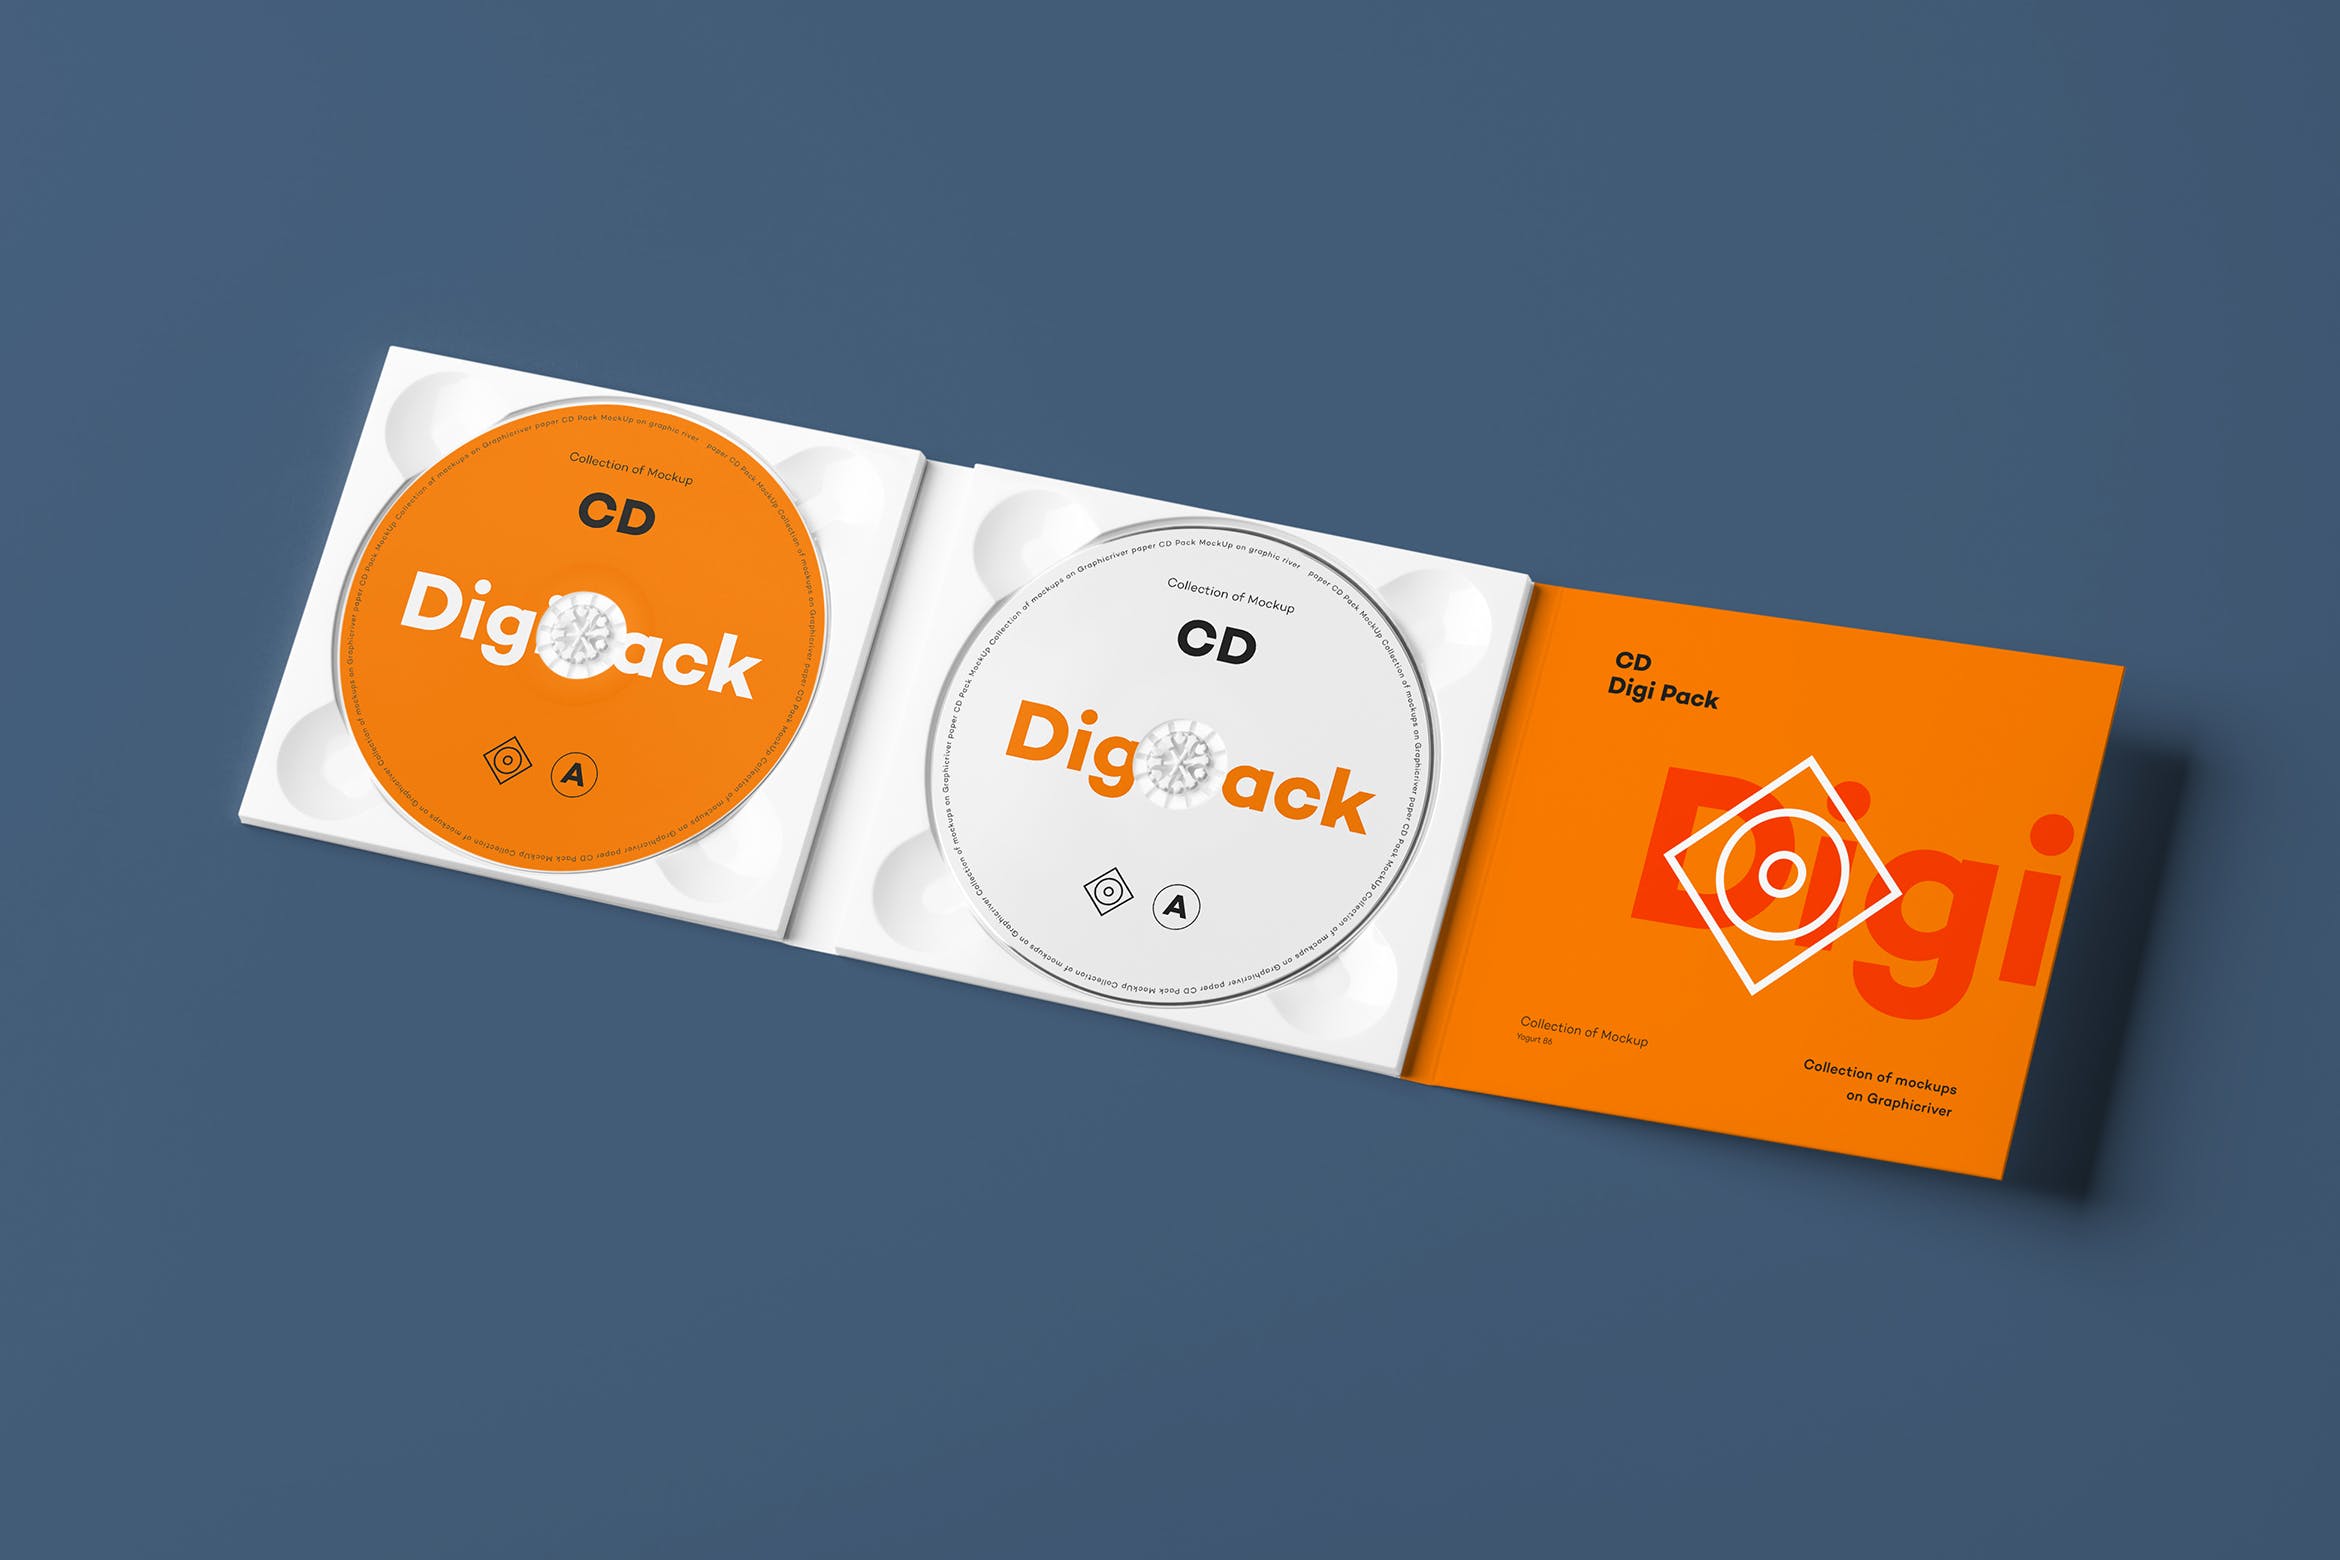 CD光碟封面&包装盒设计图素材库精选模板v8 CD Digi Pack Mock-up 8插图